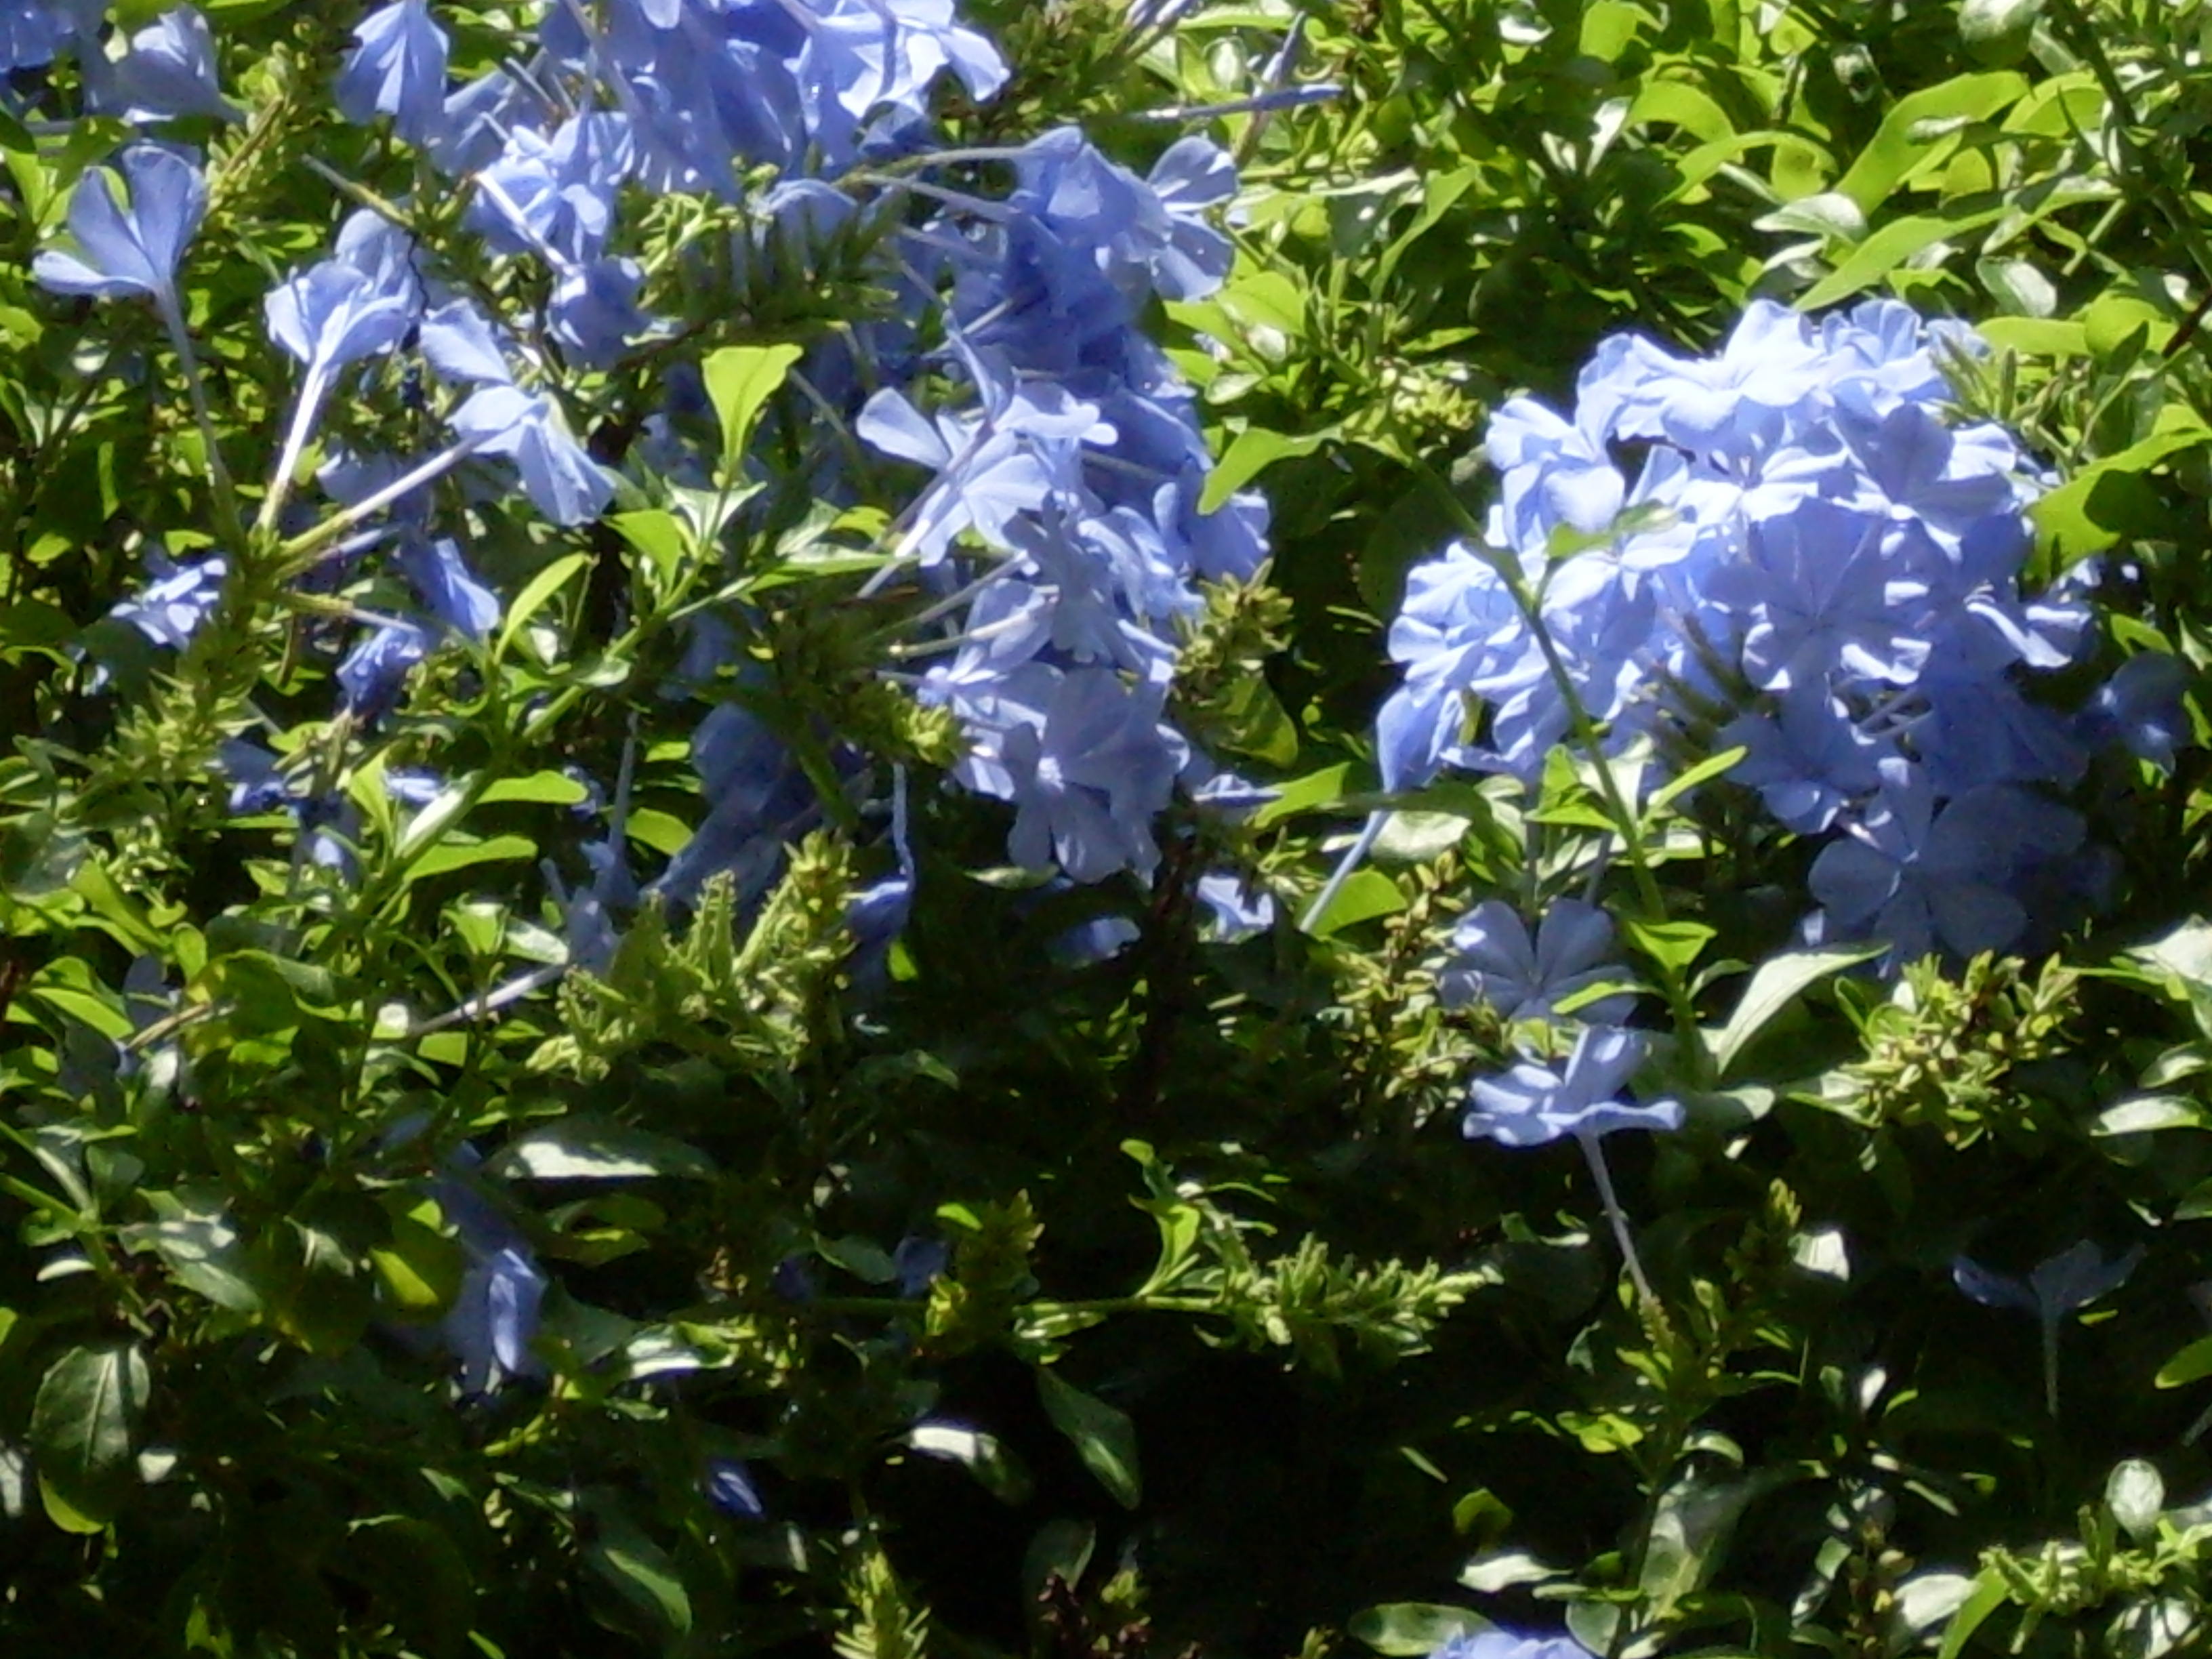 Blue flowers photo